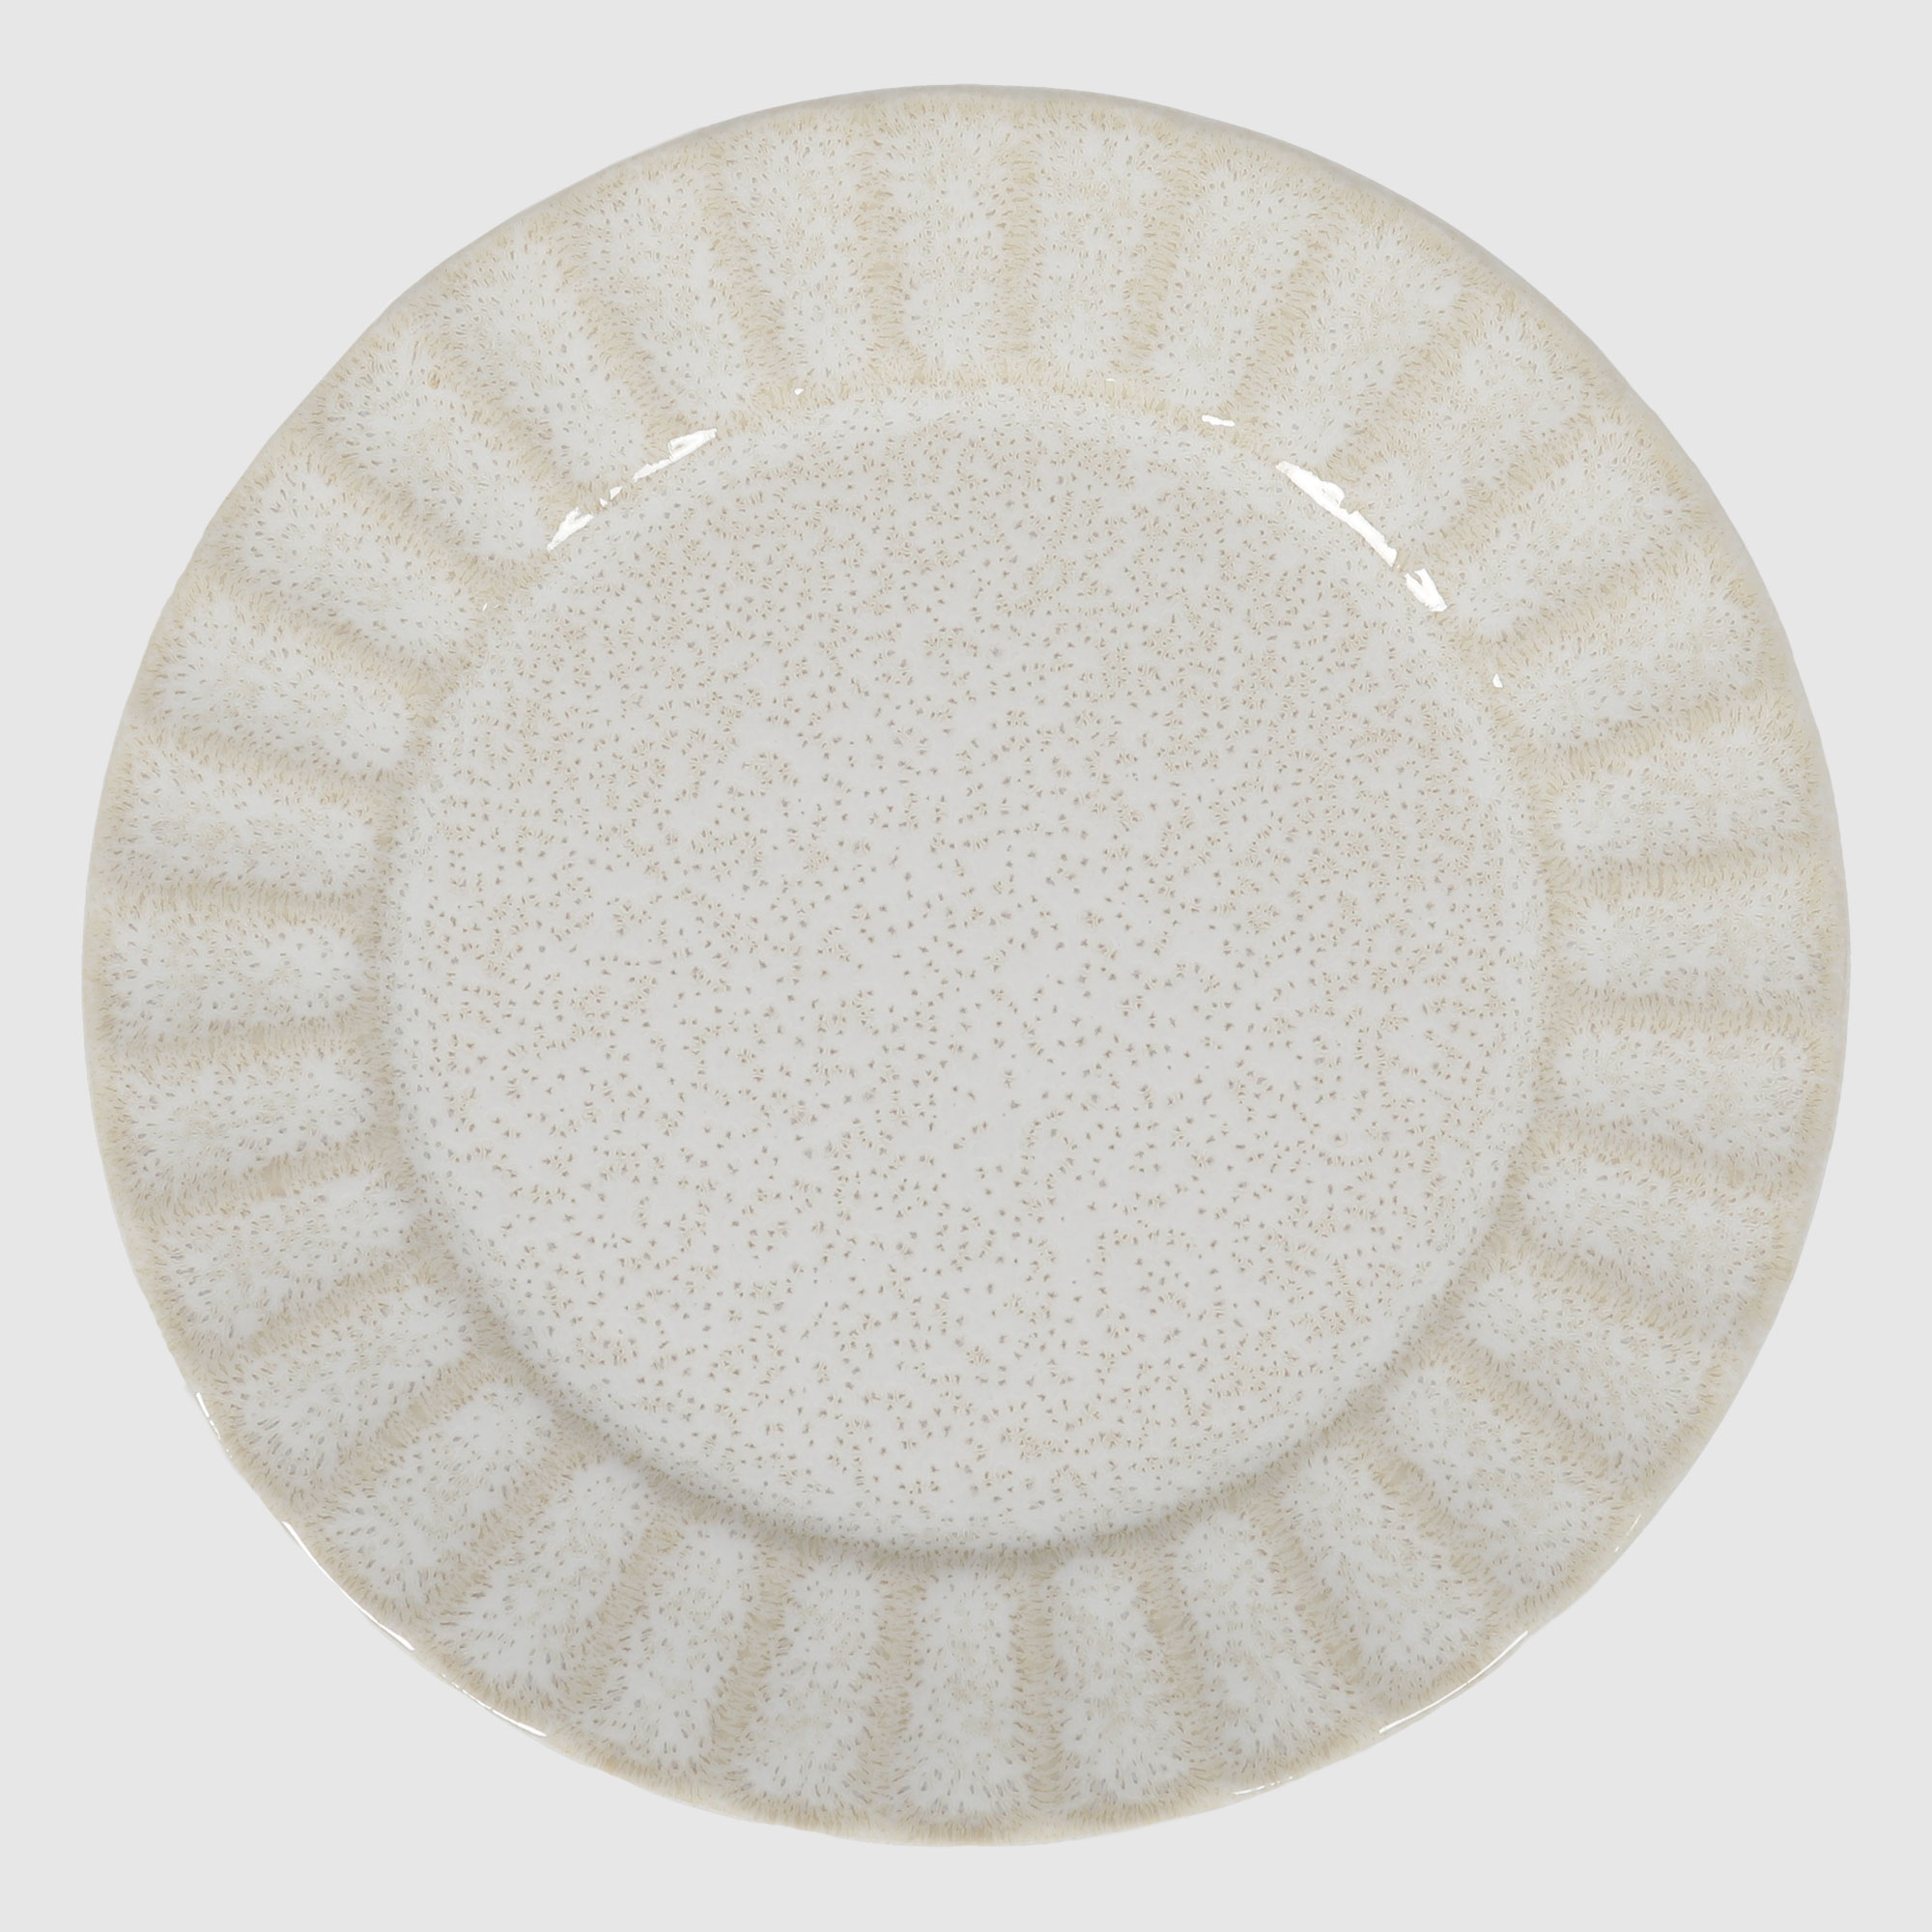 Тарелка Kutahya porselen Antropoloji 21 см тарелка суповая 22 см kutahya porselen irem недекорированная